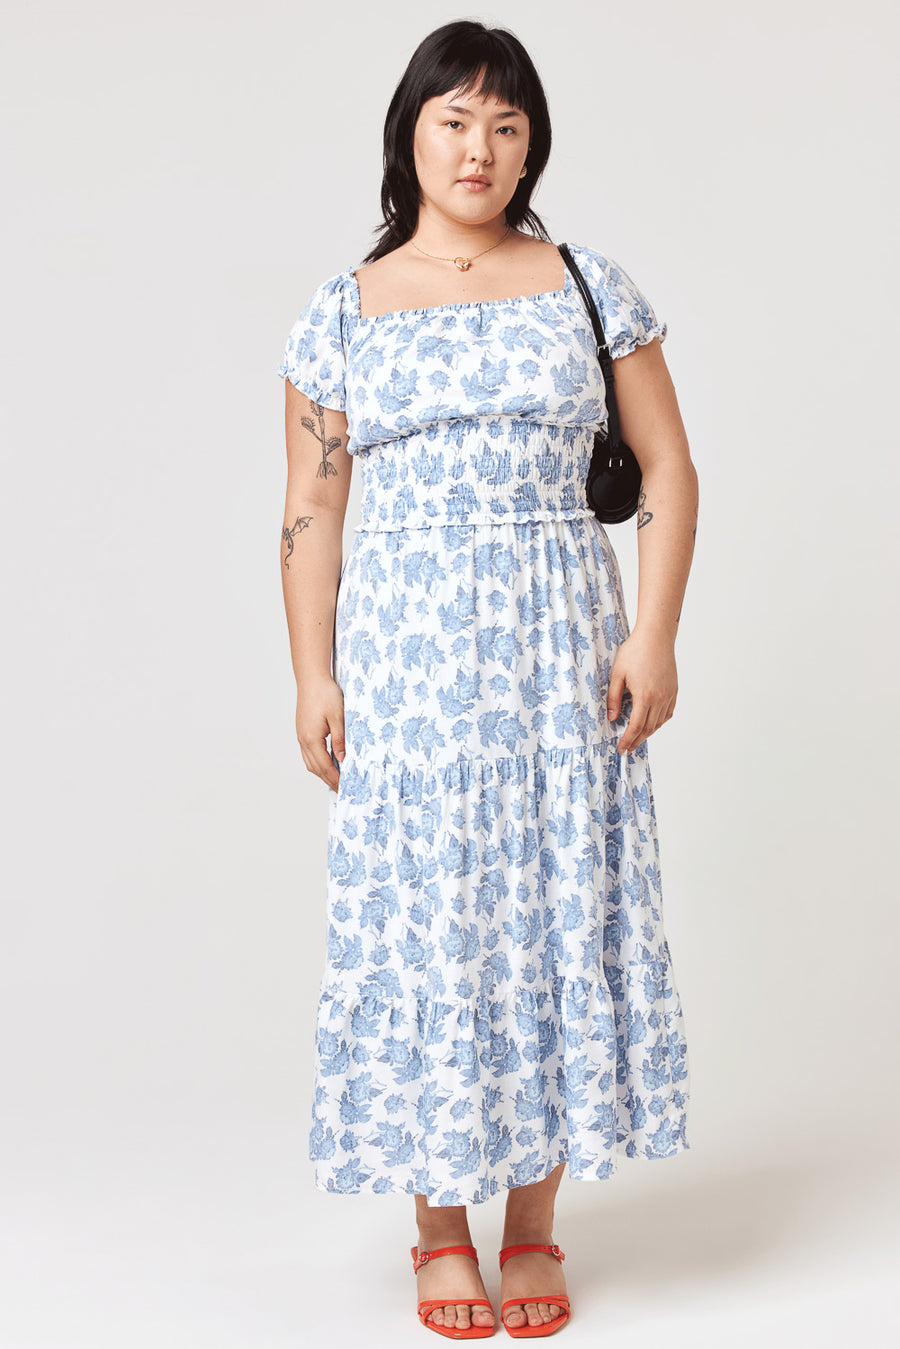 White Blue Floral Off Shoulder Midi Dress - Trixxi Clothing